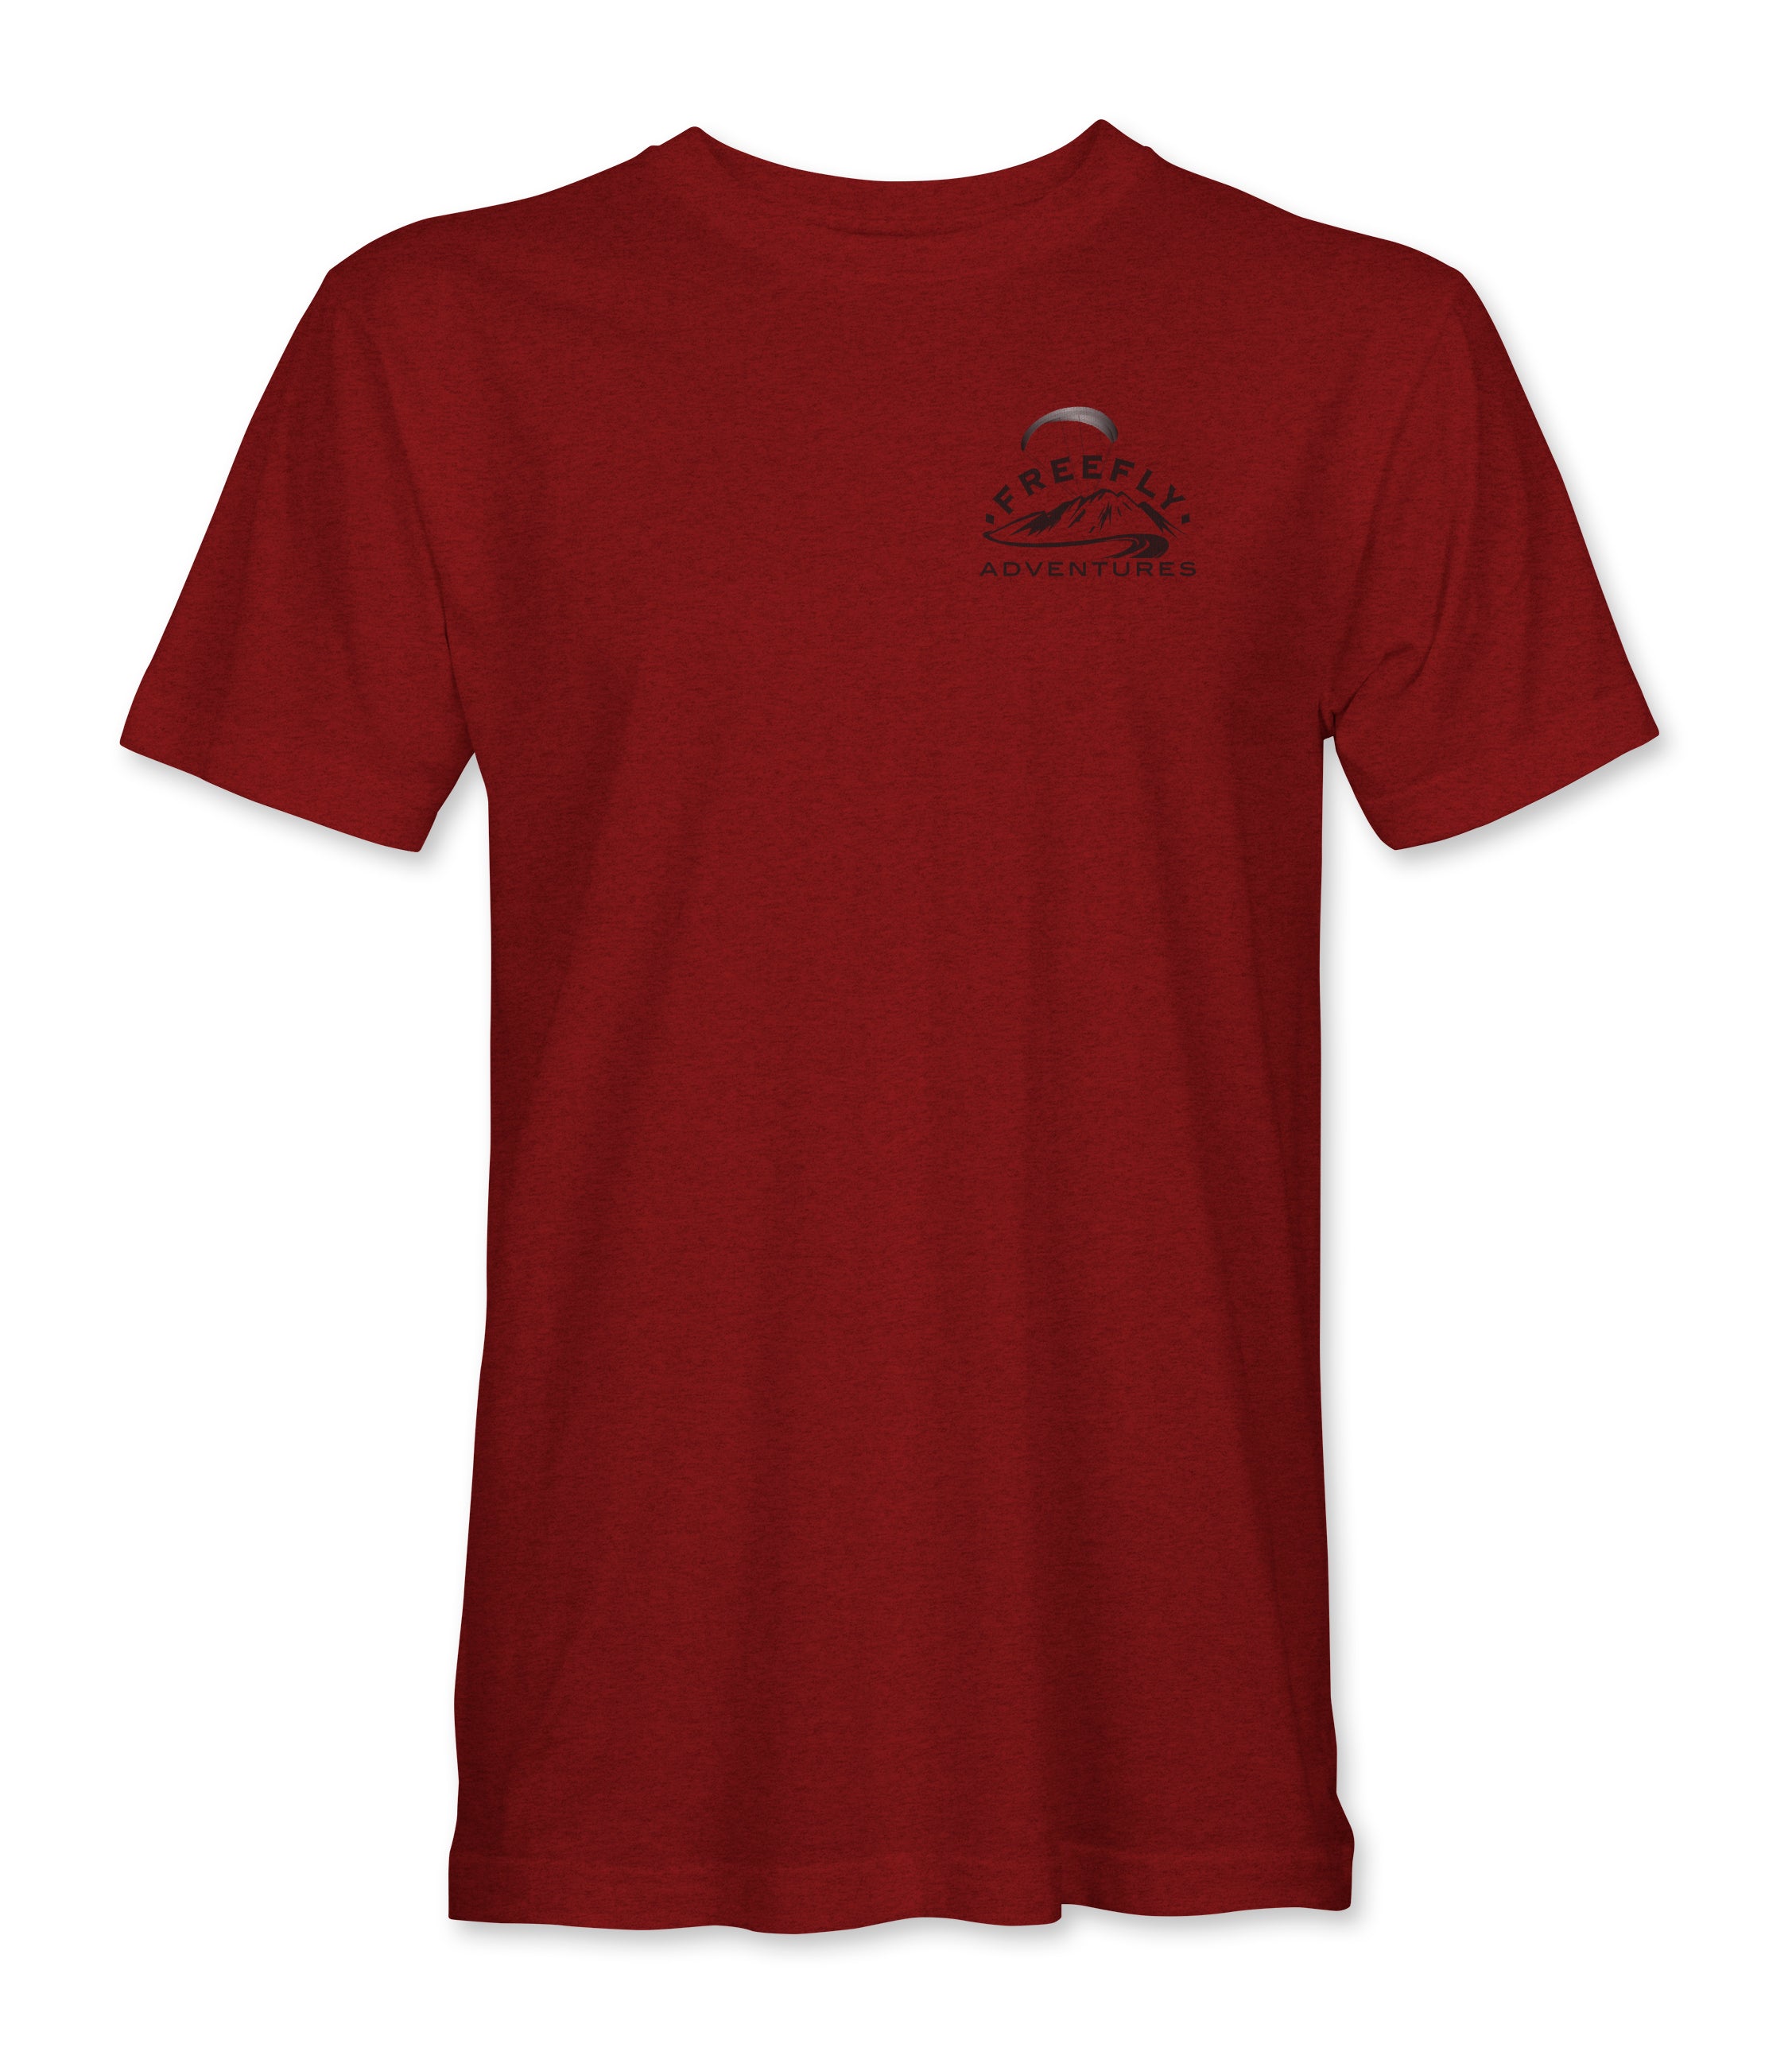 Freefly Adventure Short Sleeve T-Shirt